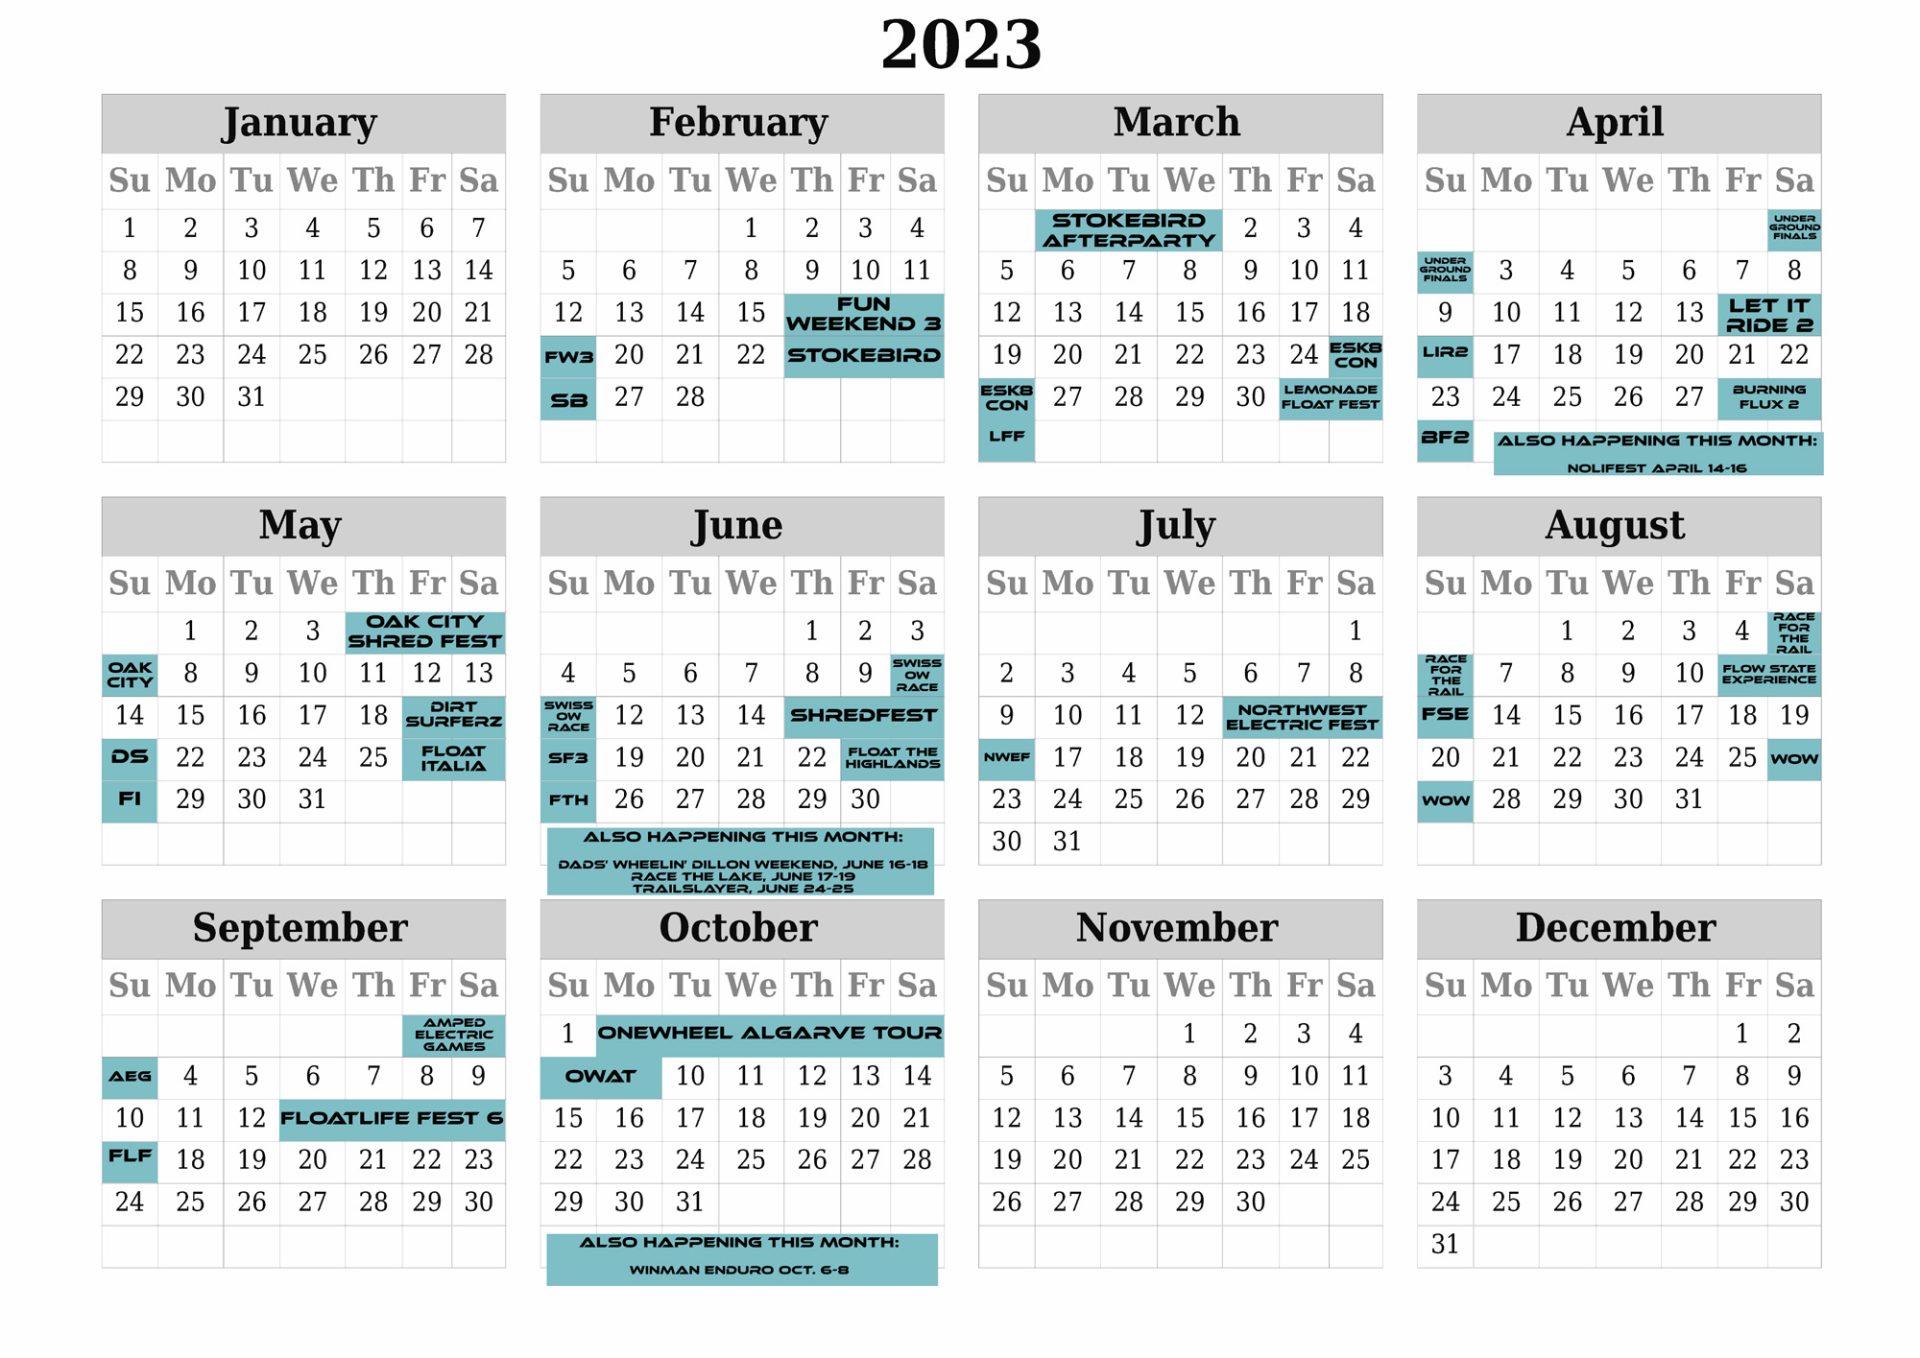 Calendar of 2023 Onewheel events